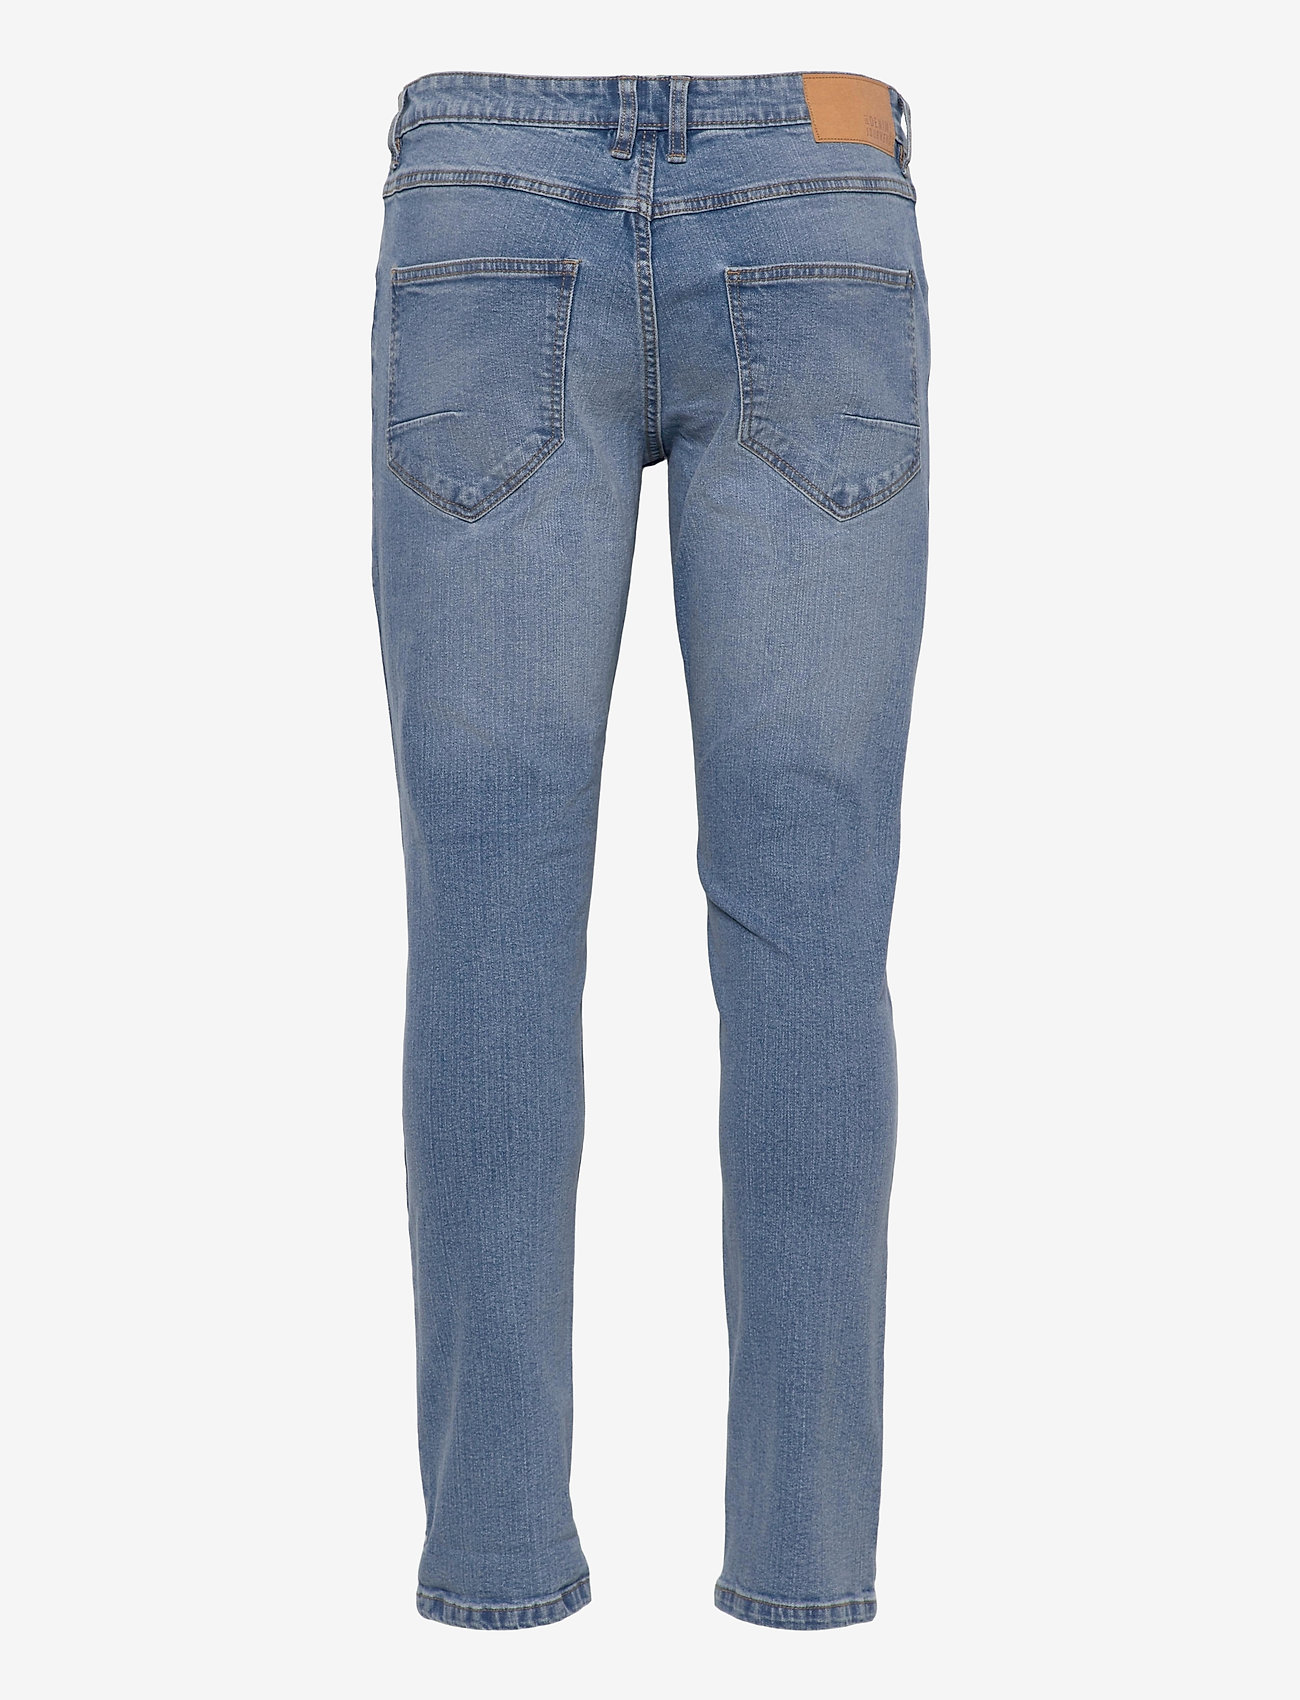 Solid - SDJOYBLUE200 - slim jeans - light blue denim - 1